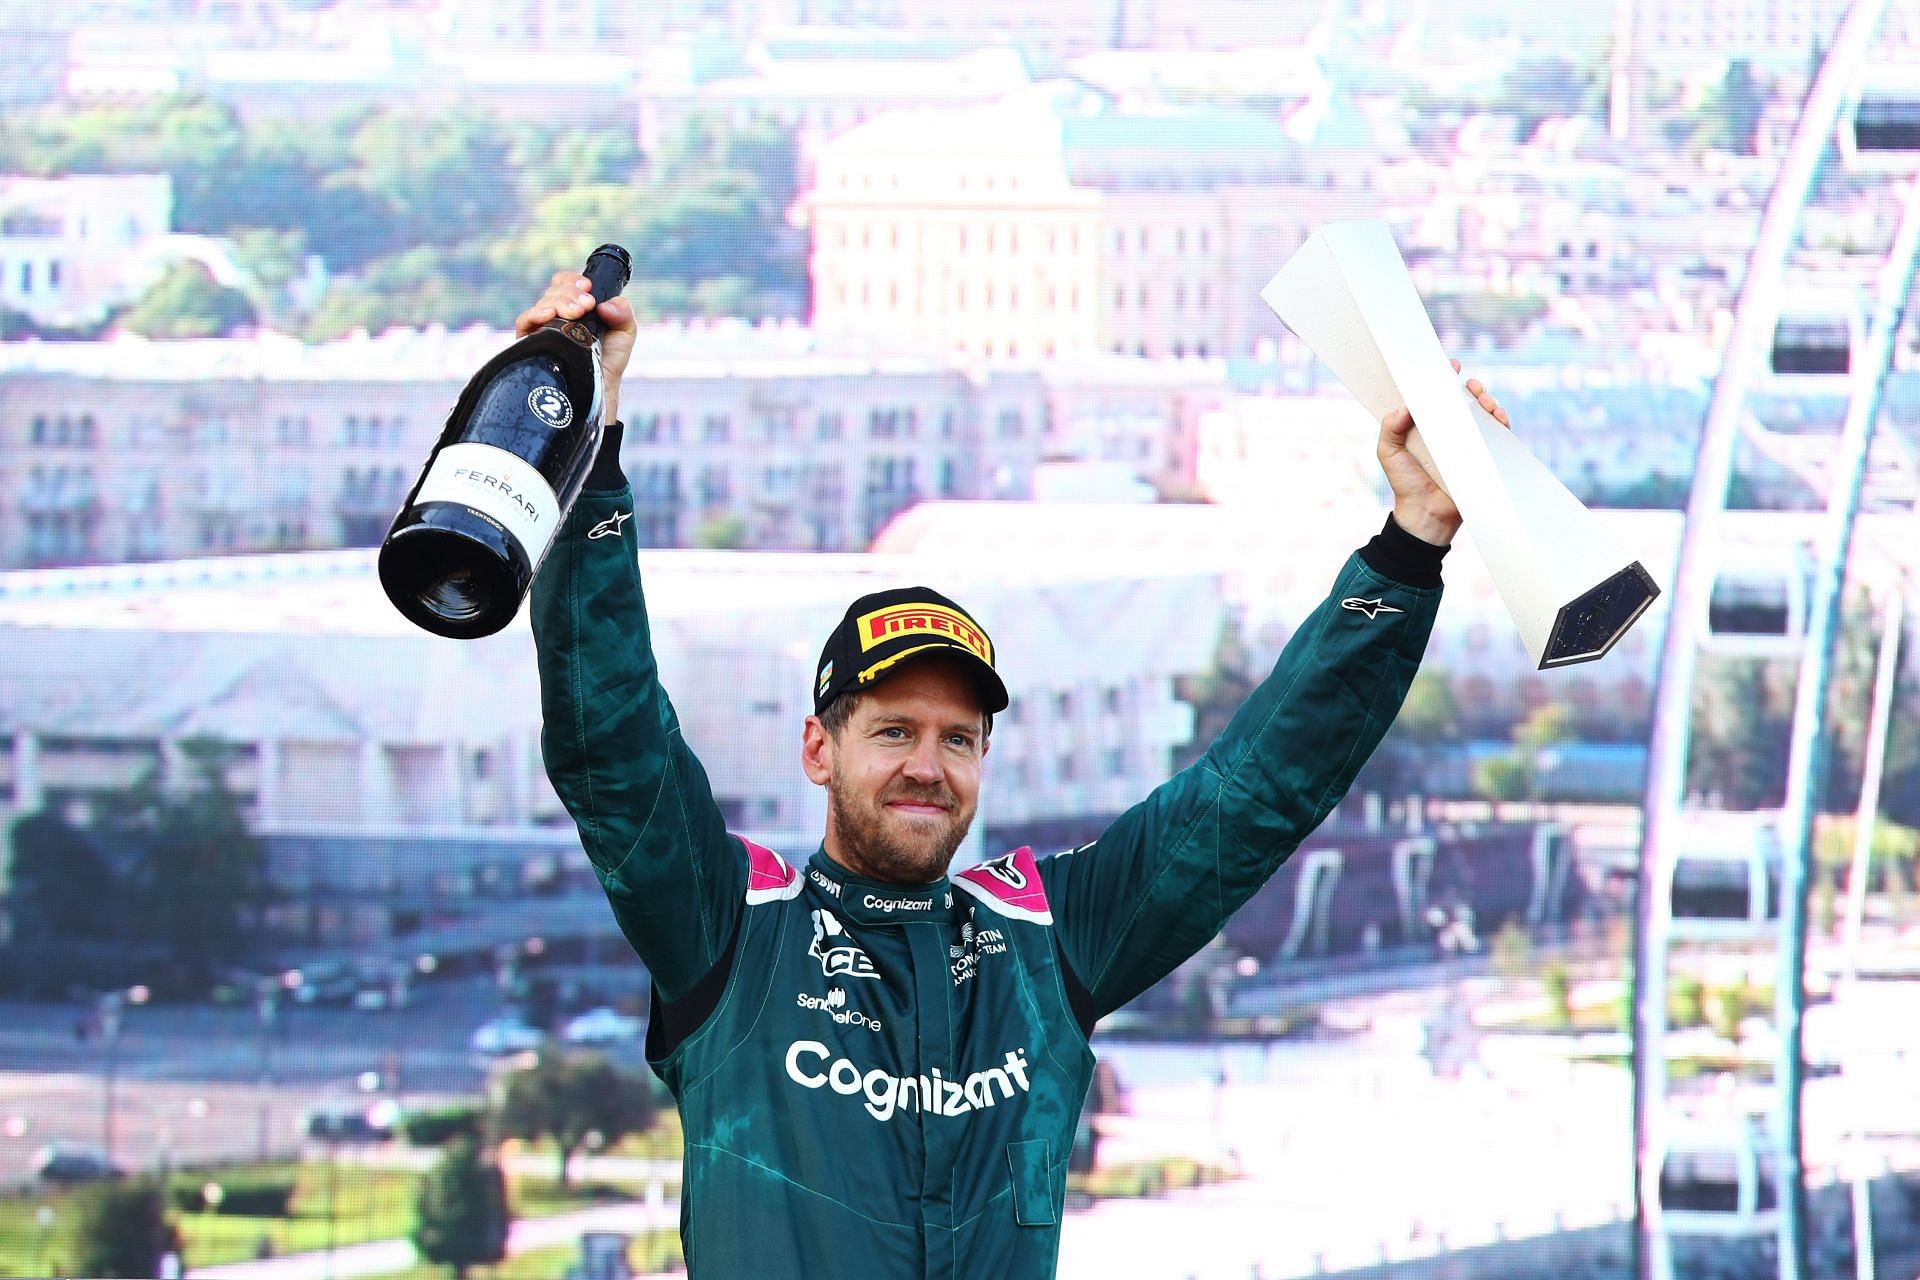 F1 Grand Prix of Azerbaijan - Sebastian Vettel celebrates a podium with his new team